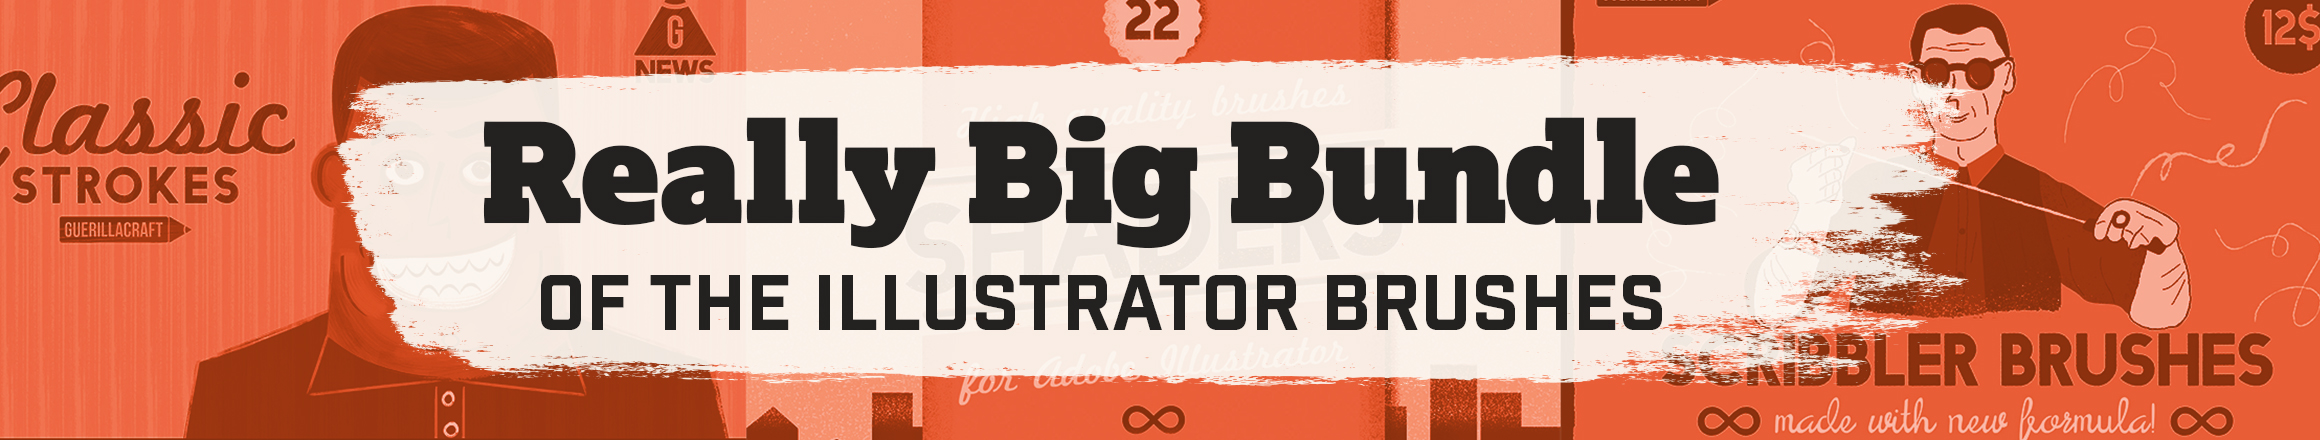 Big Bundle of Adobe Illustrator Brushes - Get 327 brushes for Adobe Illustrator for SALE PRICE NOW!